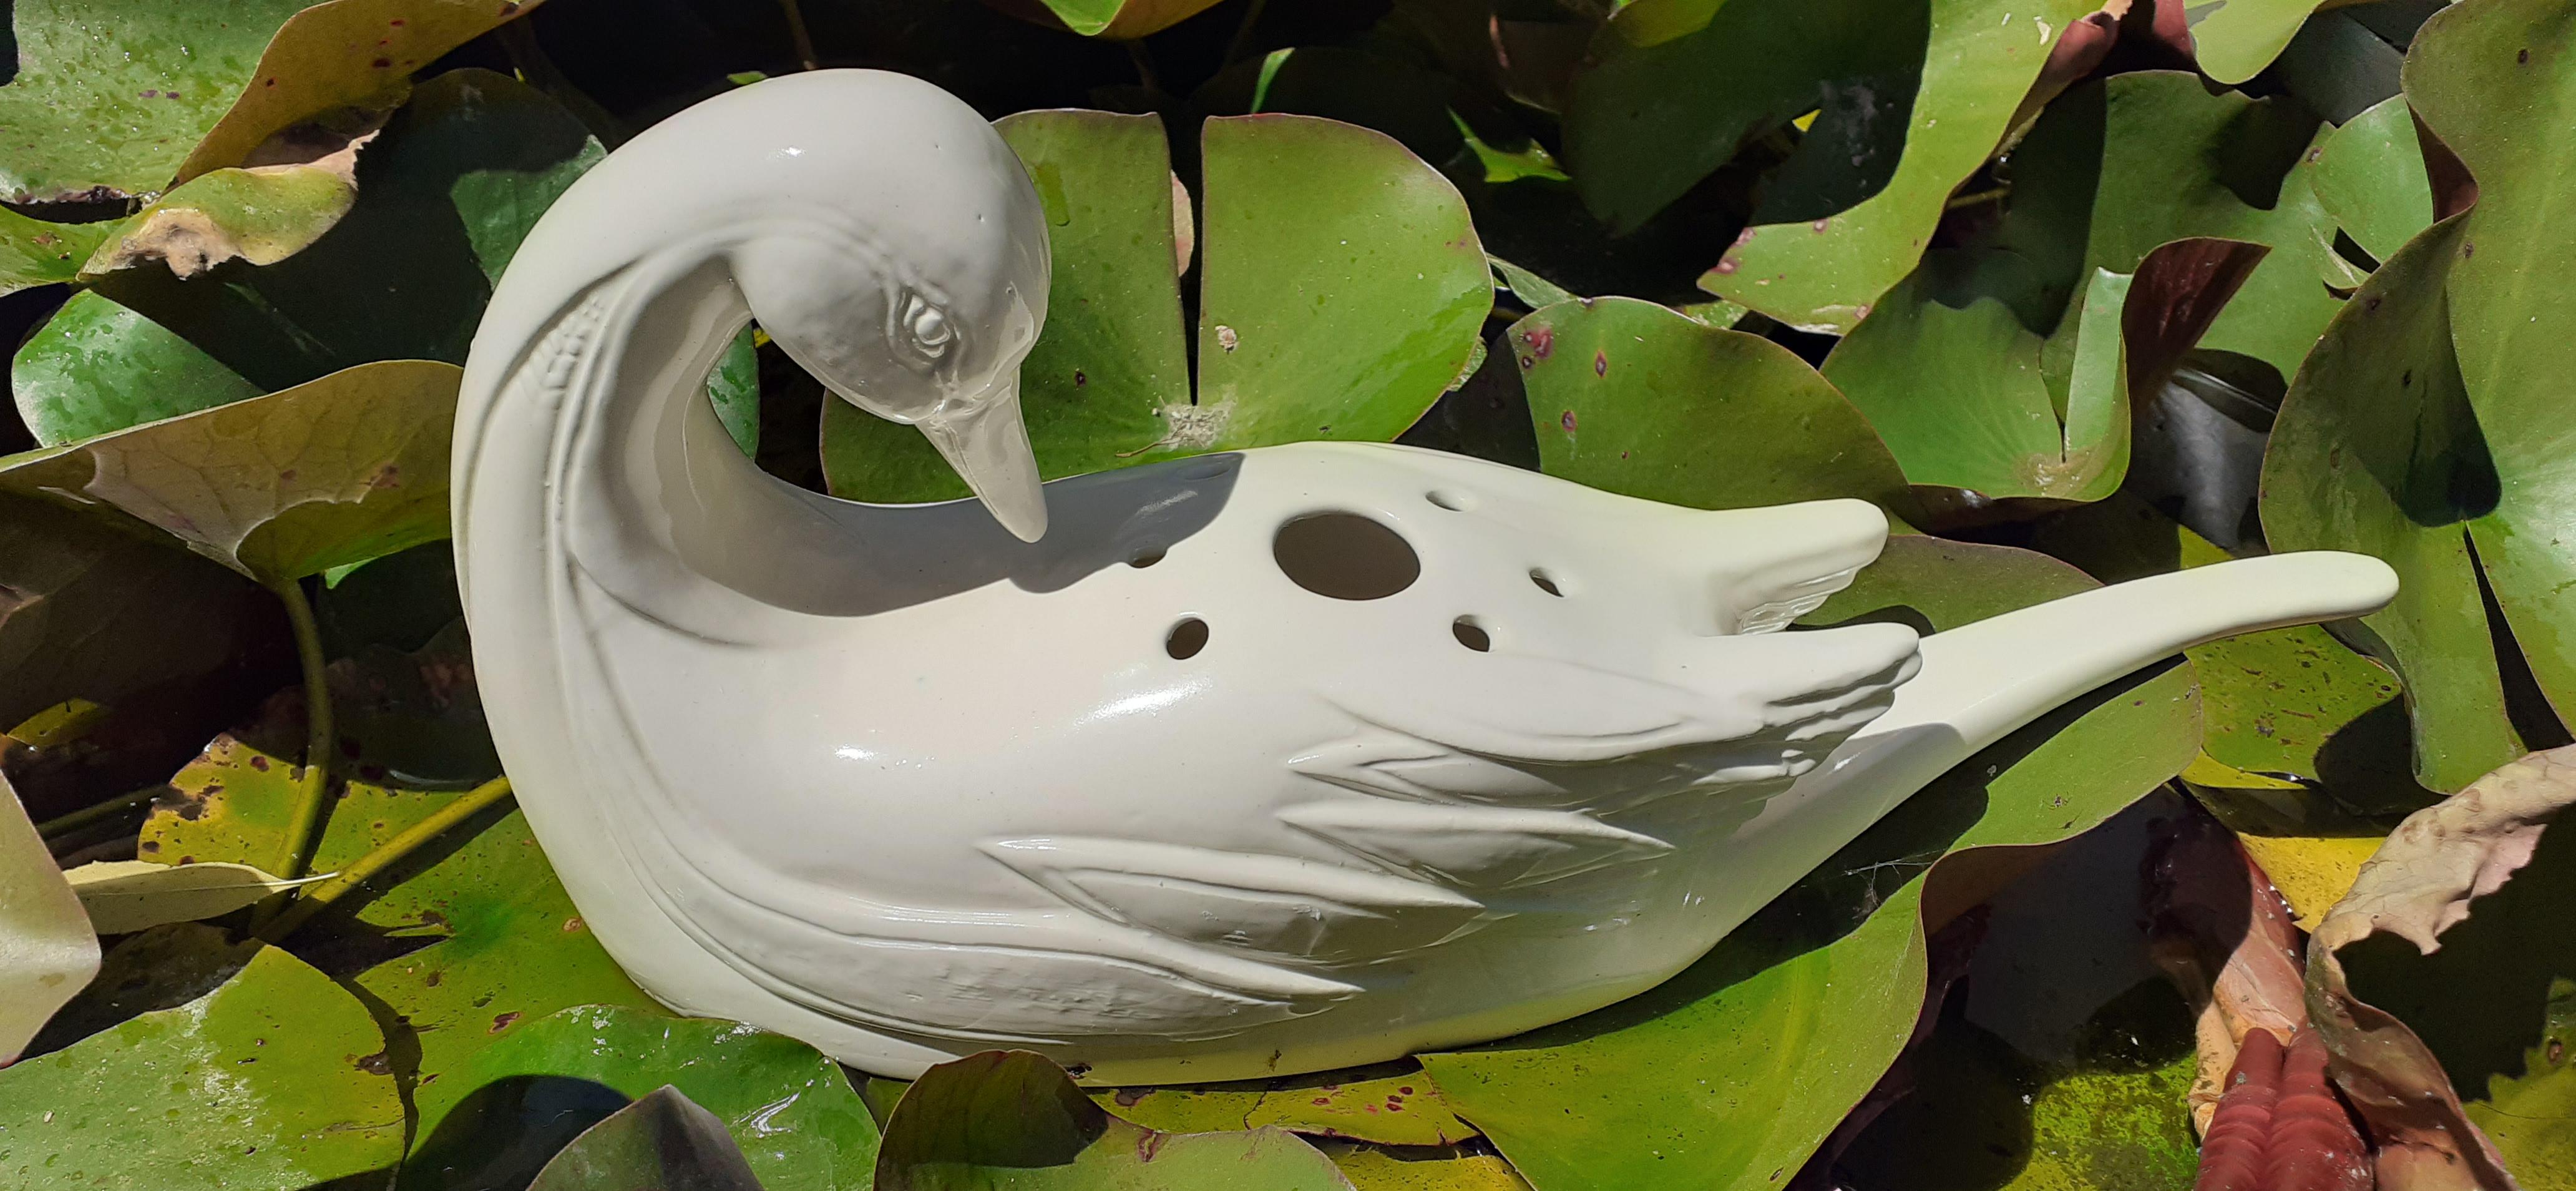 Exceptional Hermès Centerpiece Vase Ceramic Duck From La Mare aux Canards RARE For Sale 8